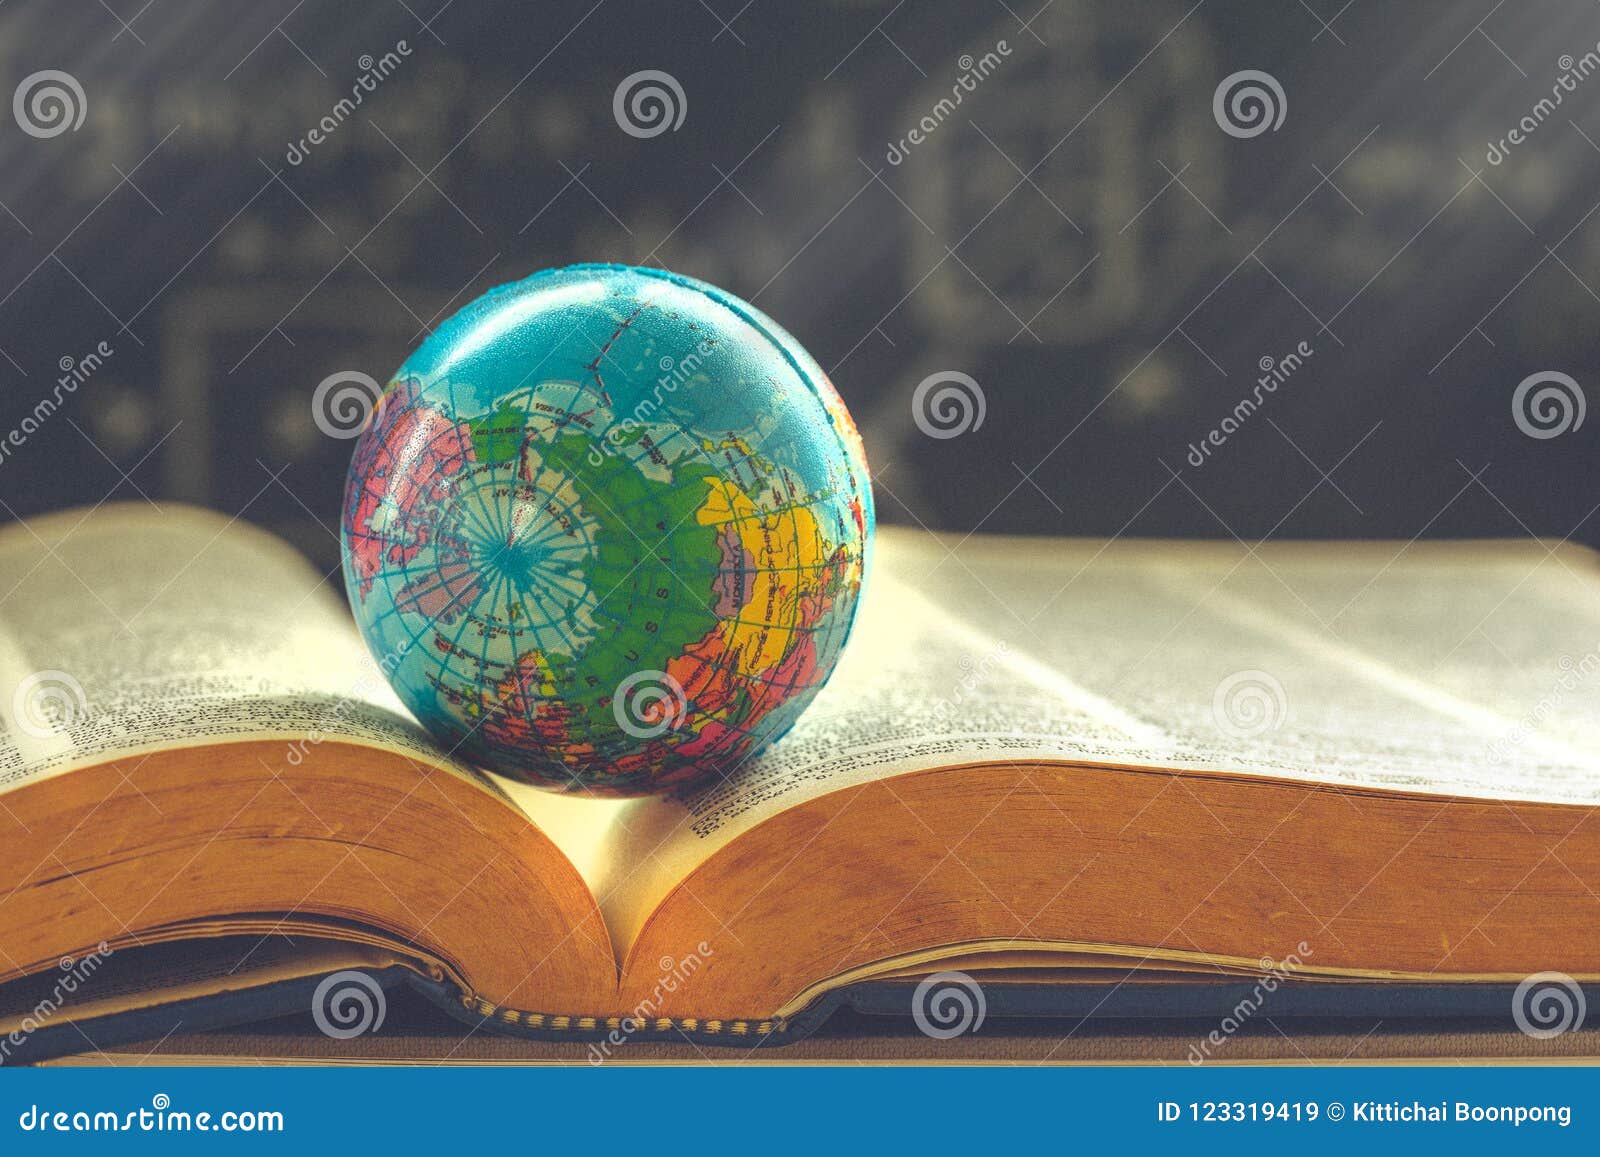 world globe on book. education school concept